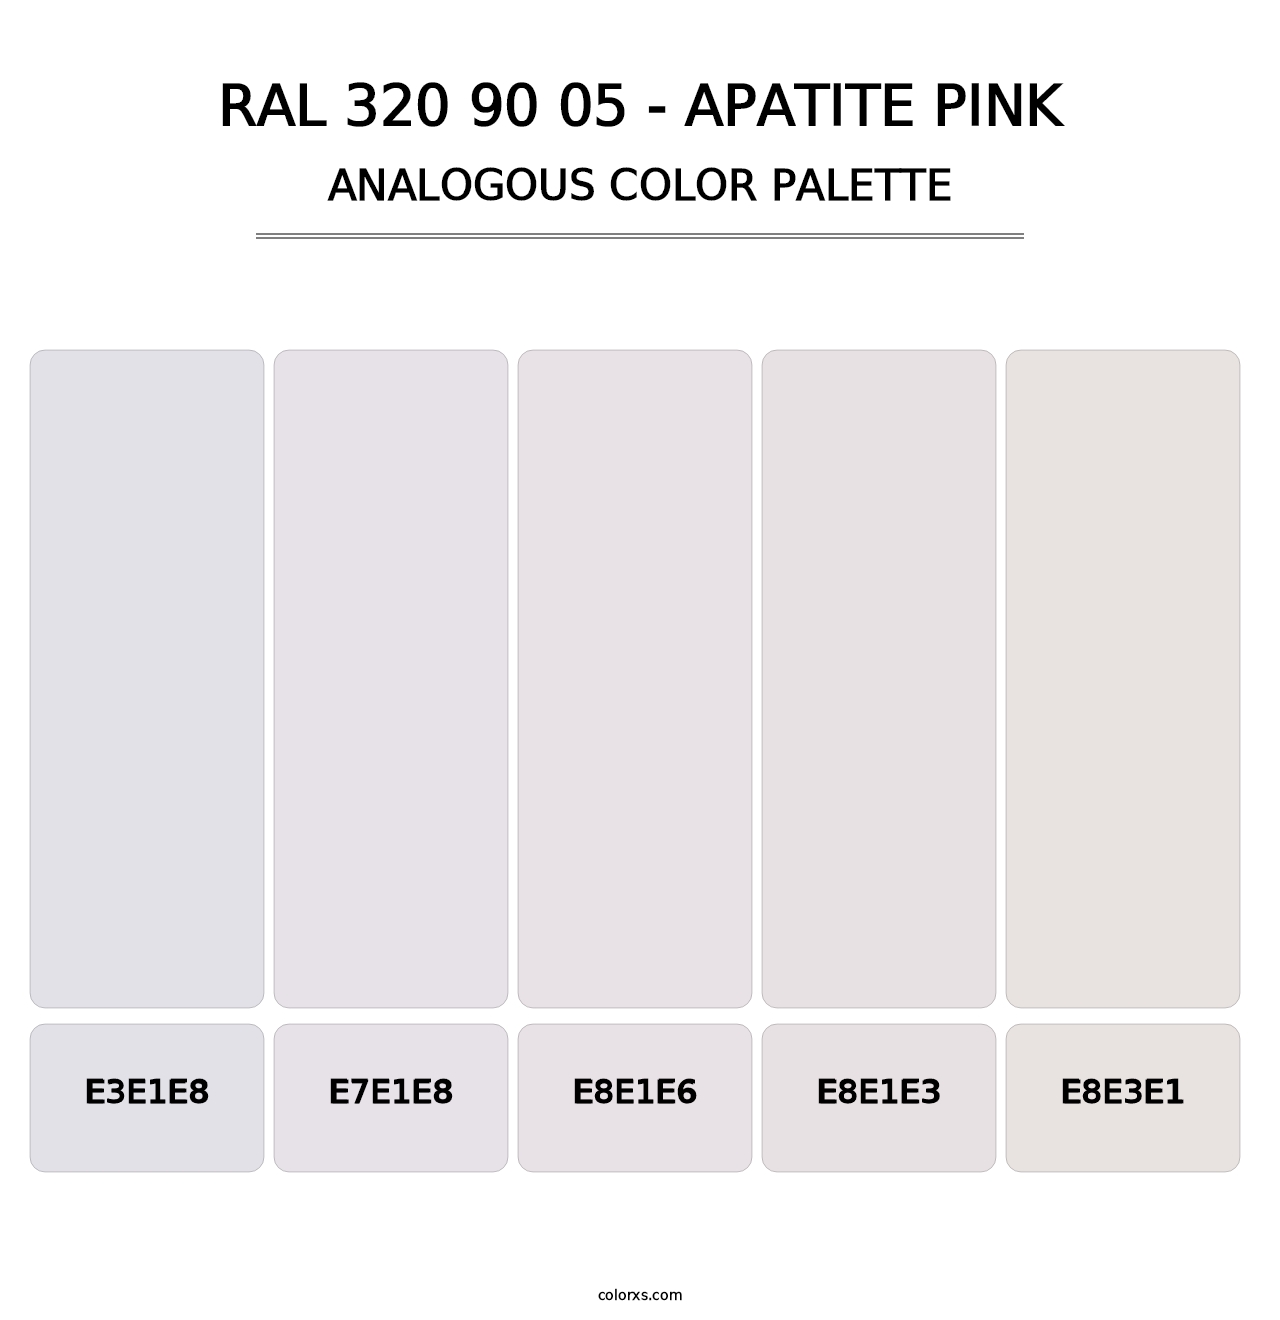 RAL 320 90 05 - Apatite Pink - Analogous Color Palette